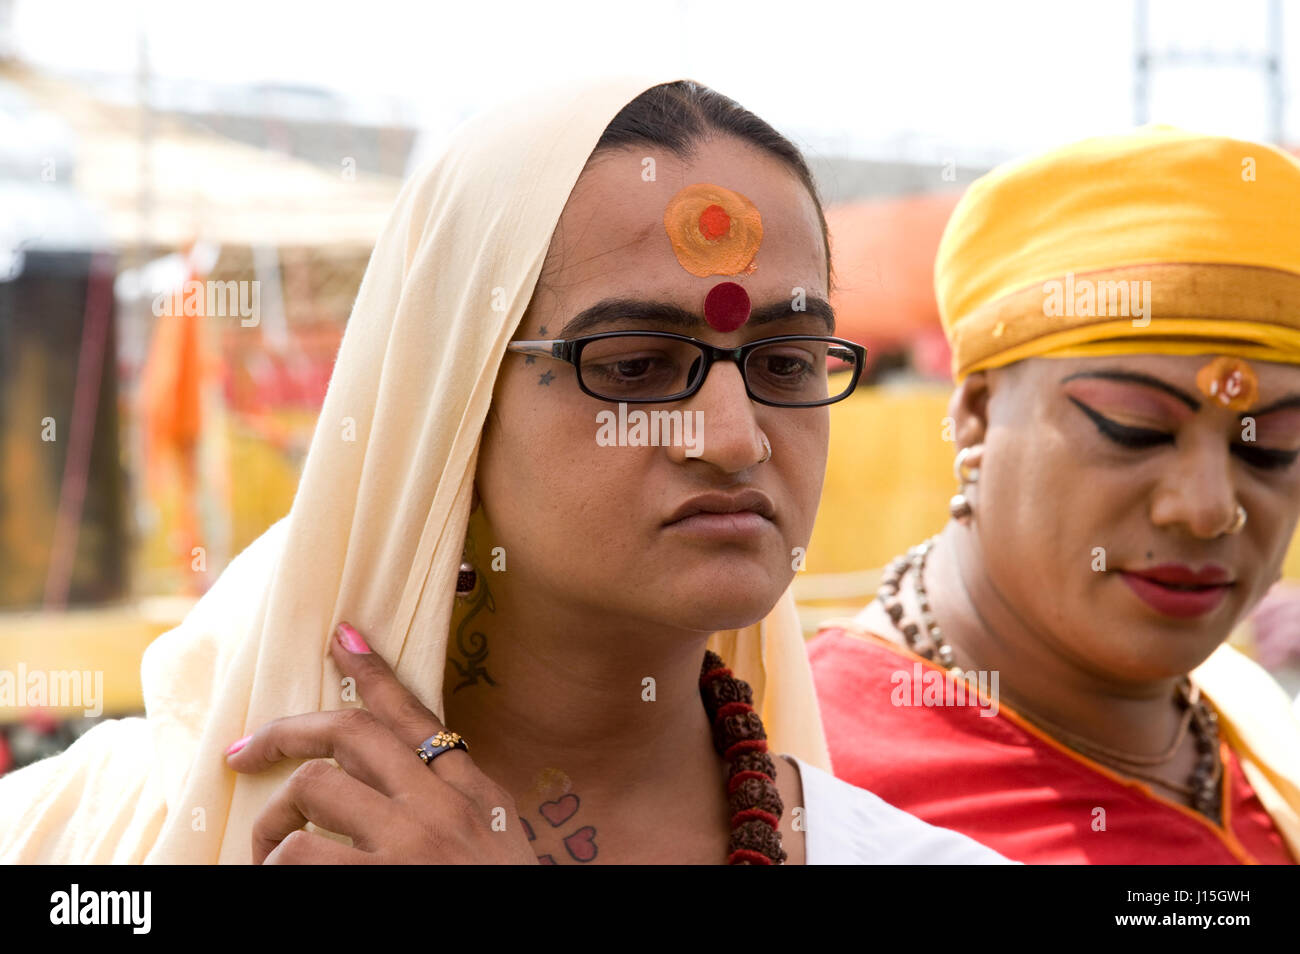 Les transgenres, kinnar akhara, Kumbh Mela, Madhya Pradesh, Inde, Asie Banque D'Images